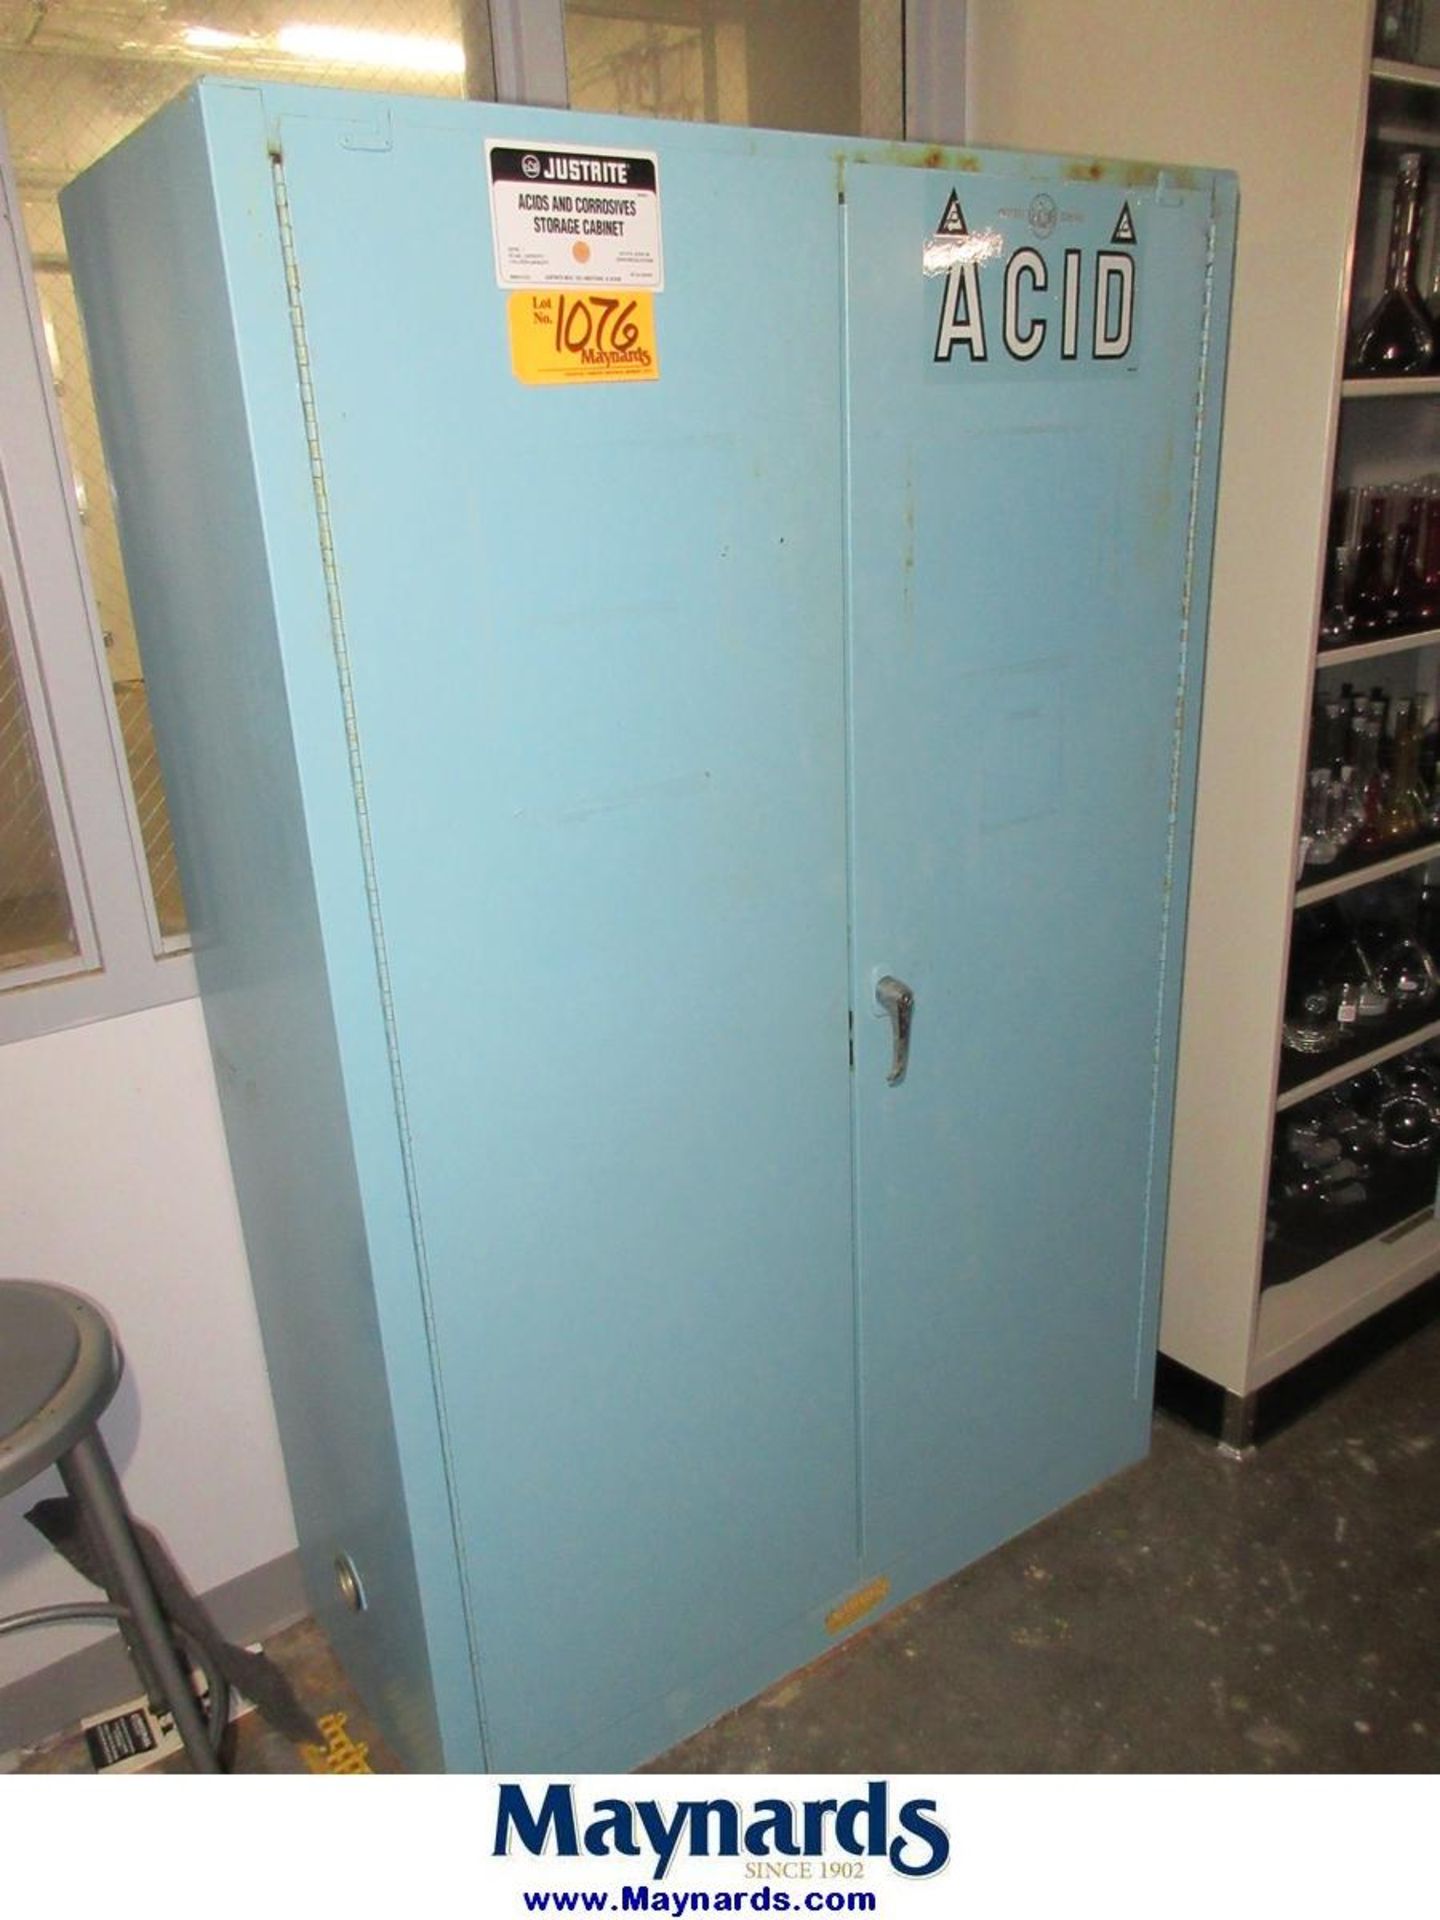 Justrite MFG. Co 25705 Acid and Corrosives Storage Cabinet